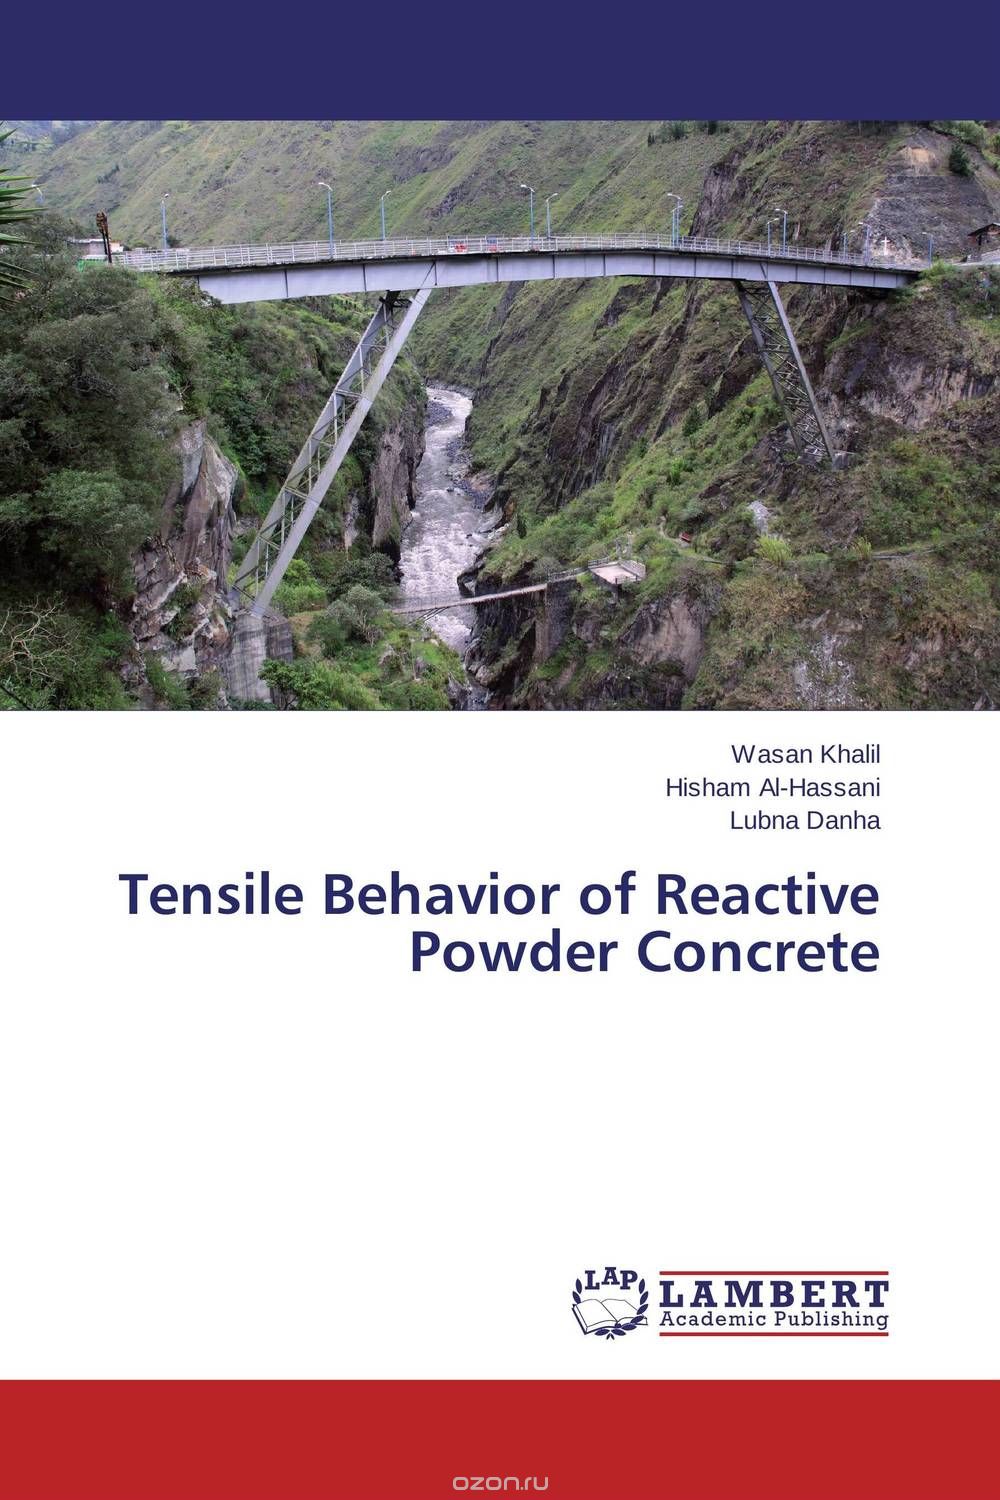 Скачать книгу "Tensile Behavior of Reactive Powder Concrete"